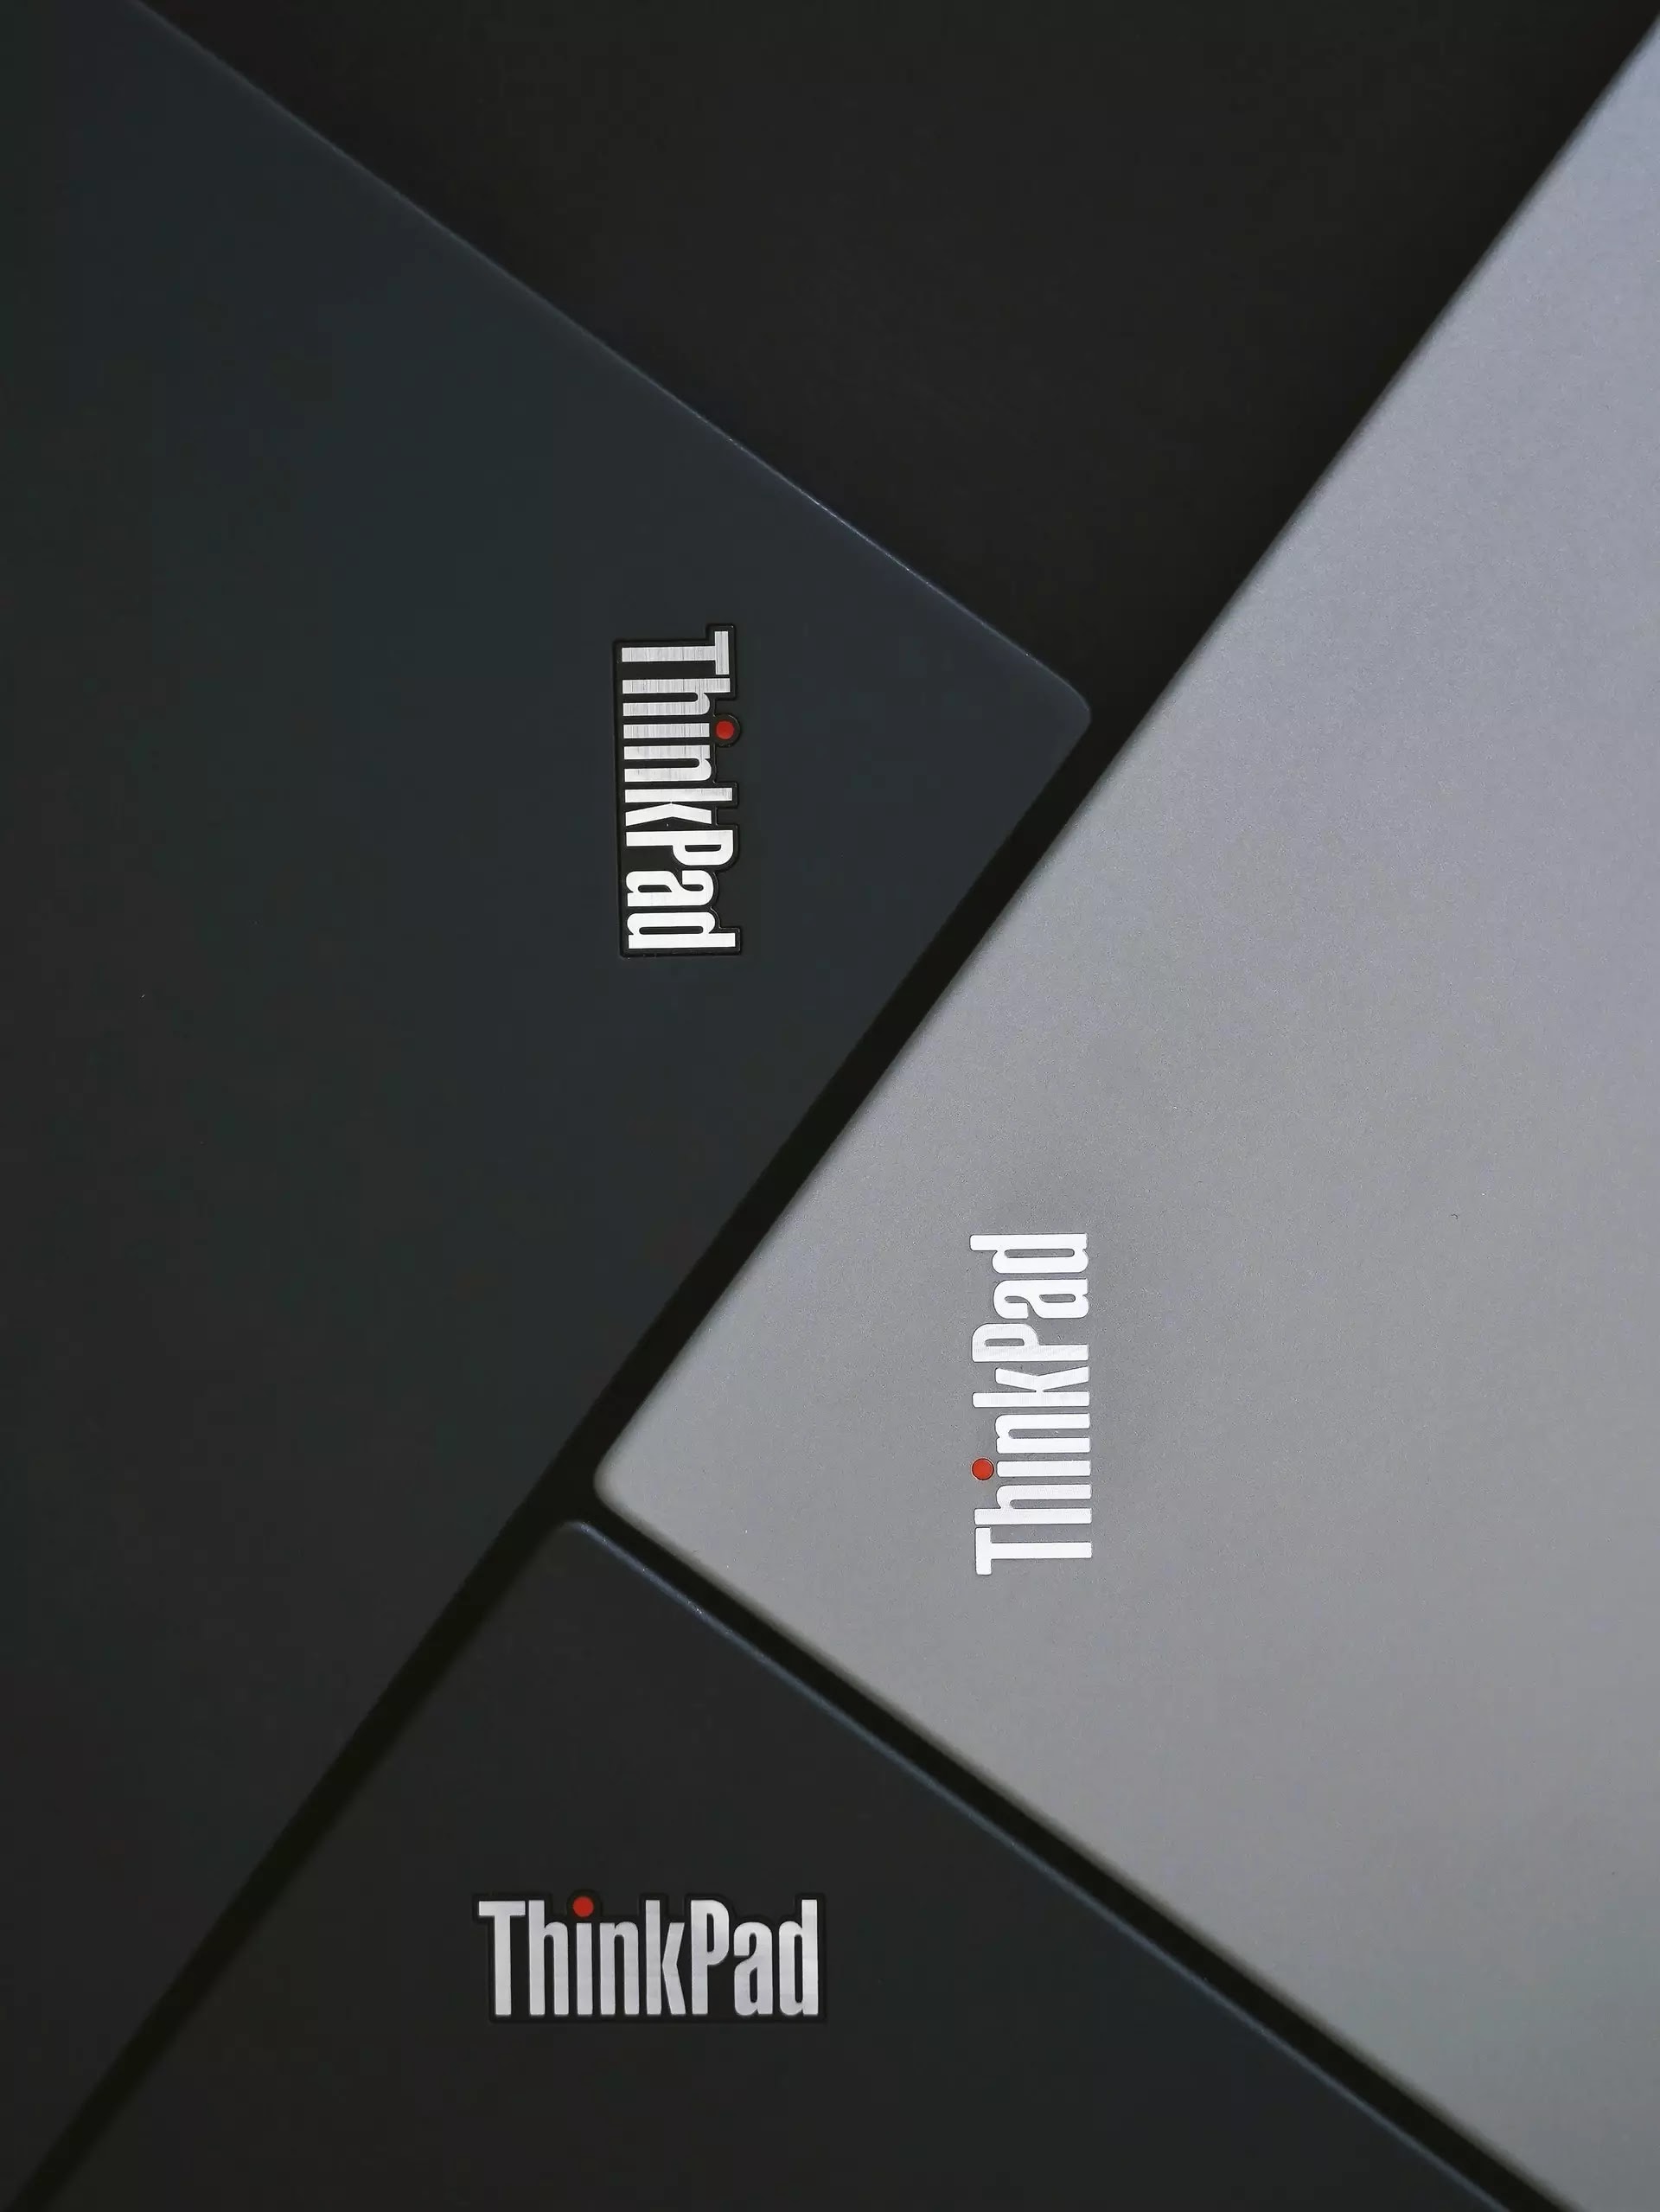 Lenovo ThinkPad Wallpaper HD